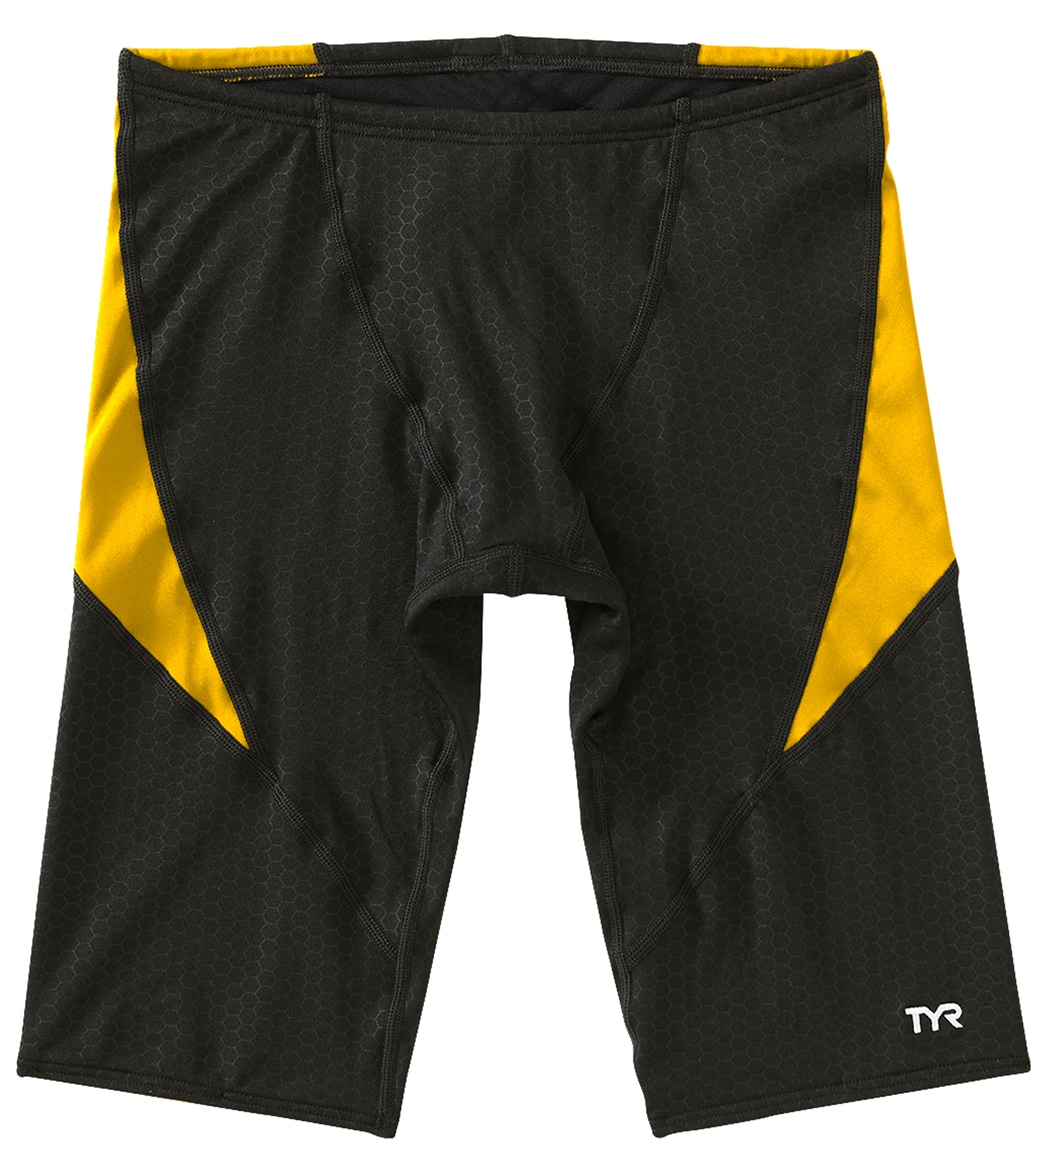 TYR Boys' Hexa Curve Splice Jammer Swimsuit - Black/Gold 22 - Swimoutlet.com